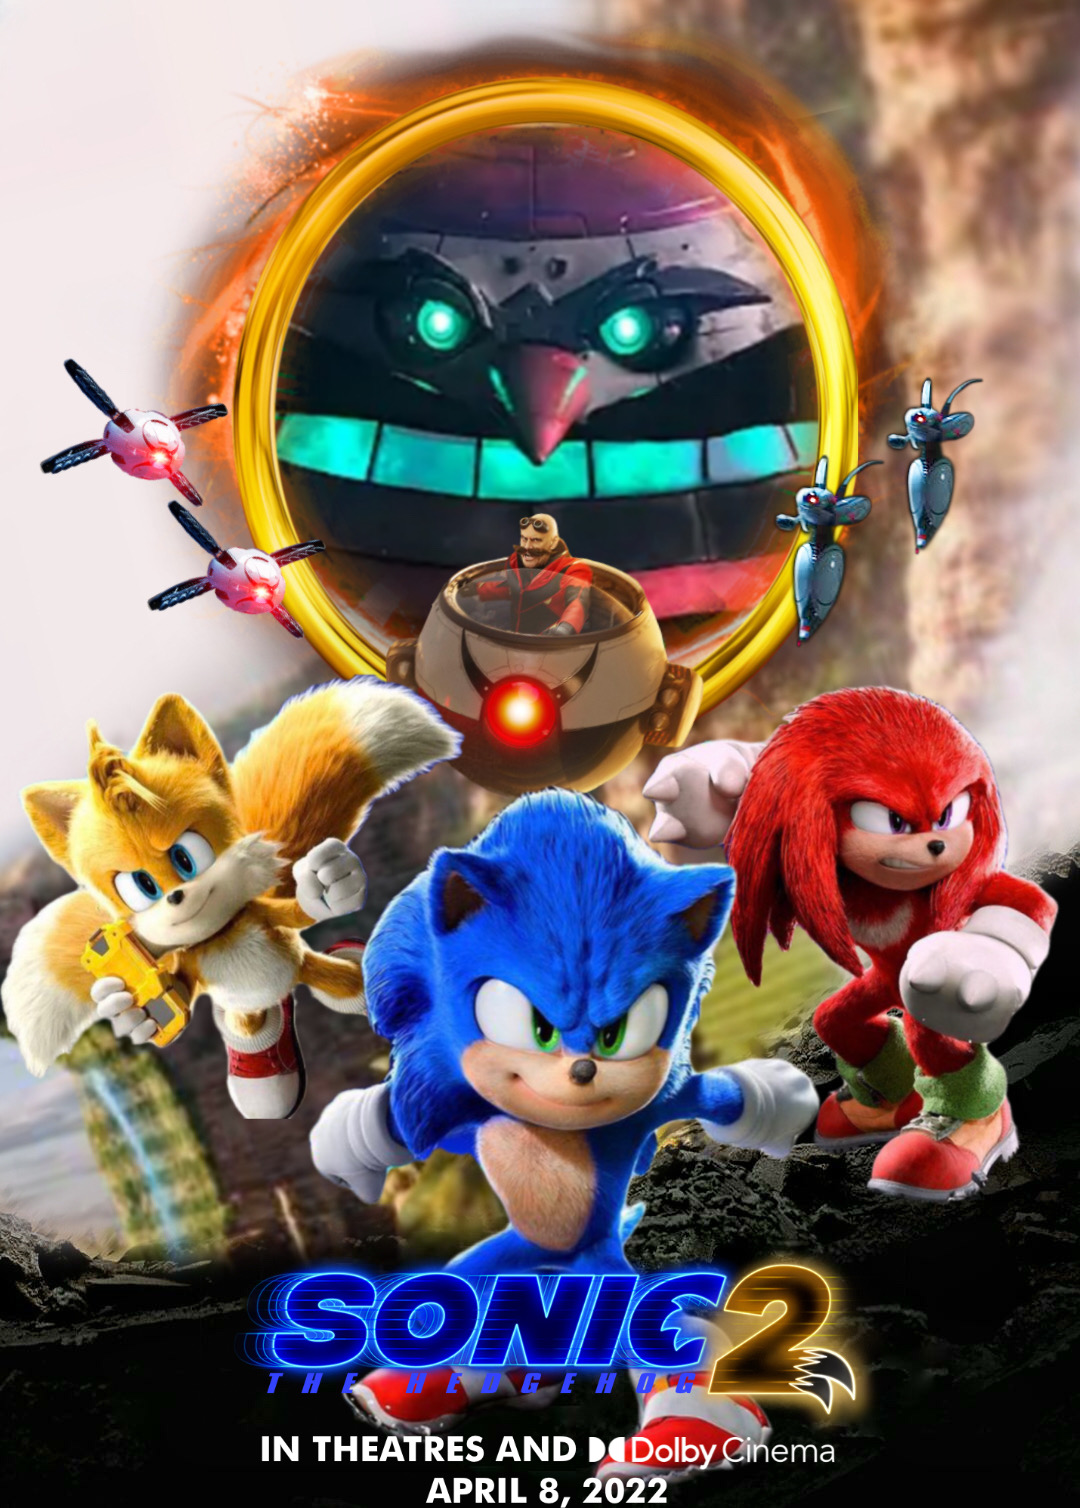 Sonic the Hedgehog (Movie) (1) - PNG by Captain-Kingsman16 on DeviantArt